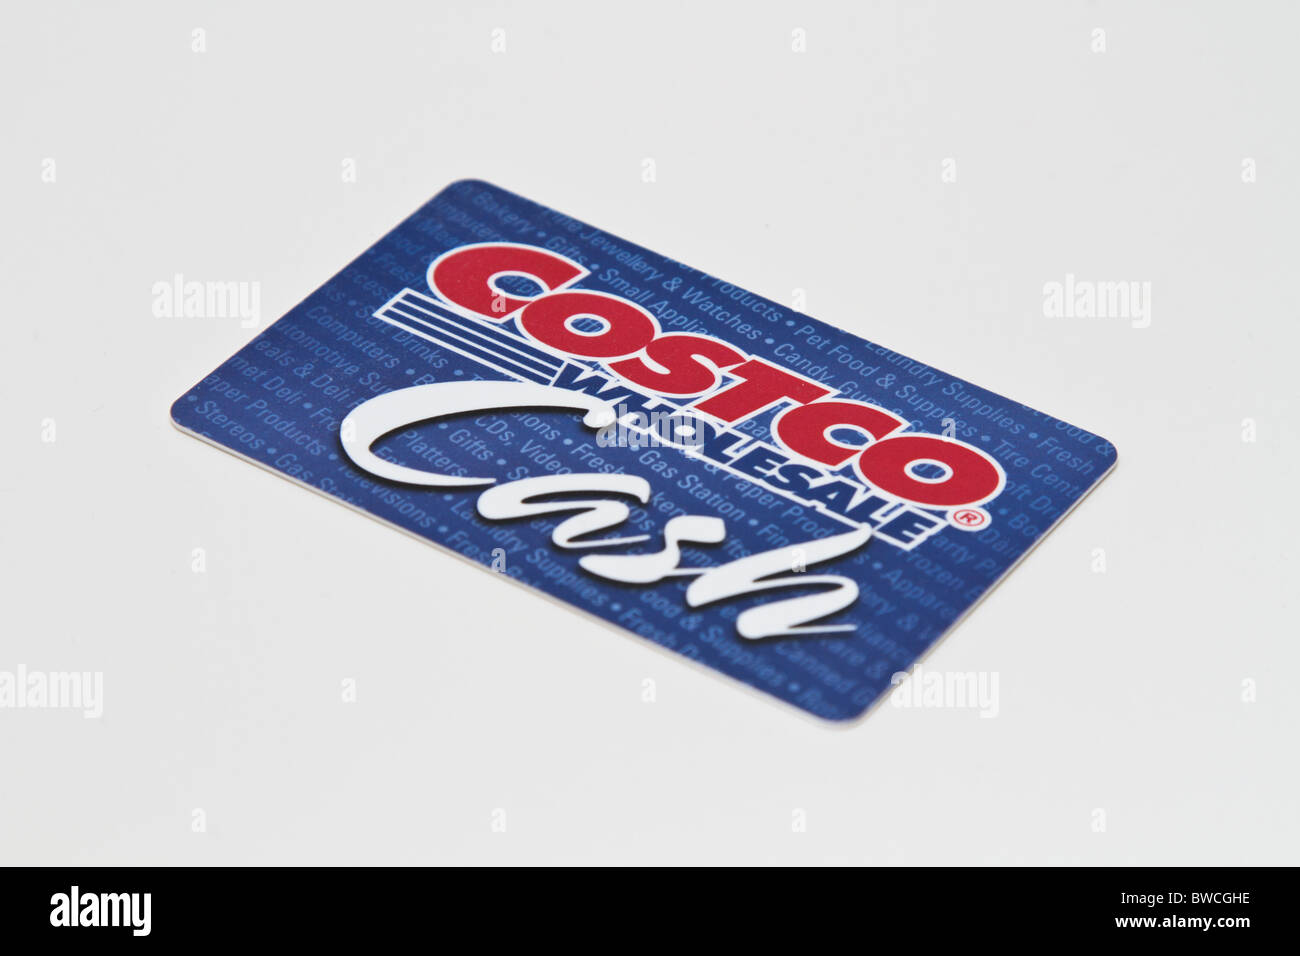 costco cashcard Stock Photo